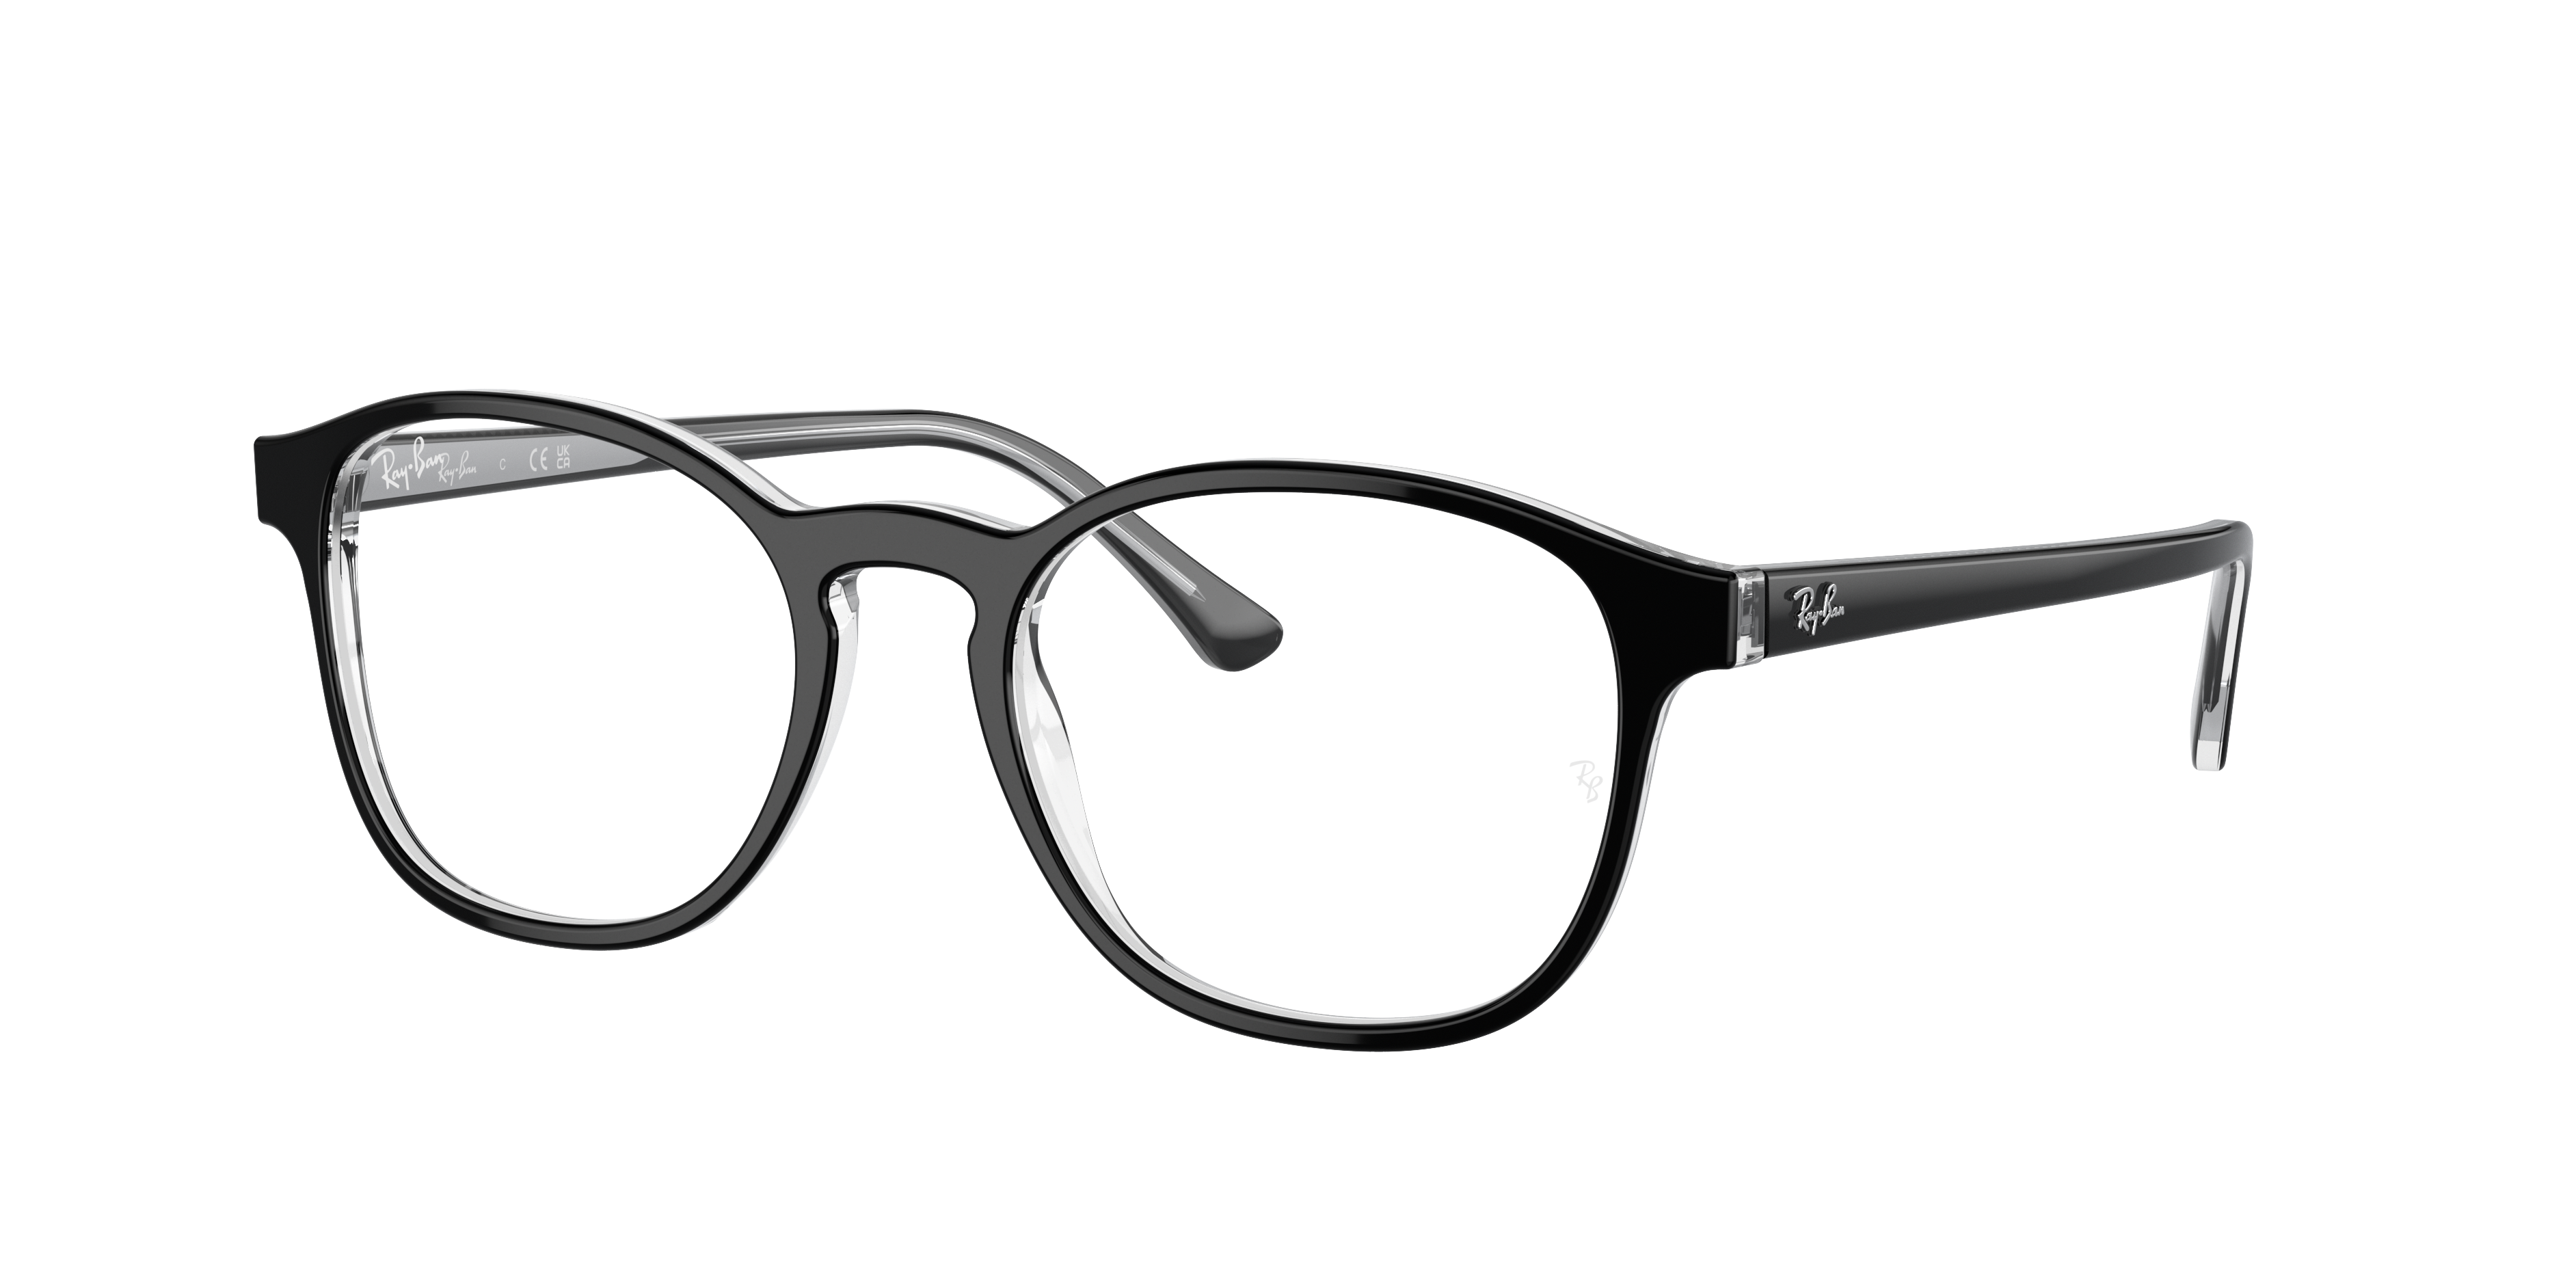 Rb5417 Optics Eyeglasses with Black On Transparent Frame - RB5417 | Ray-Ban®